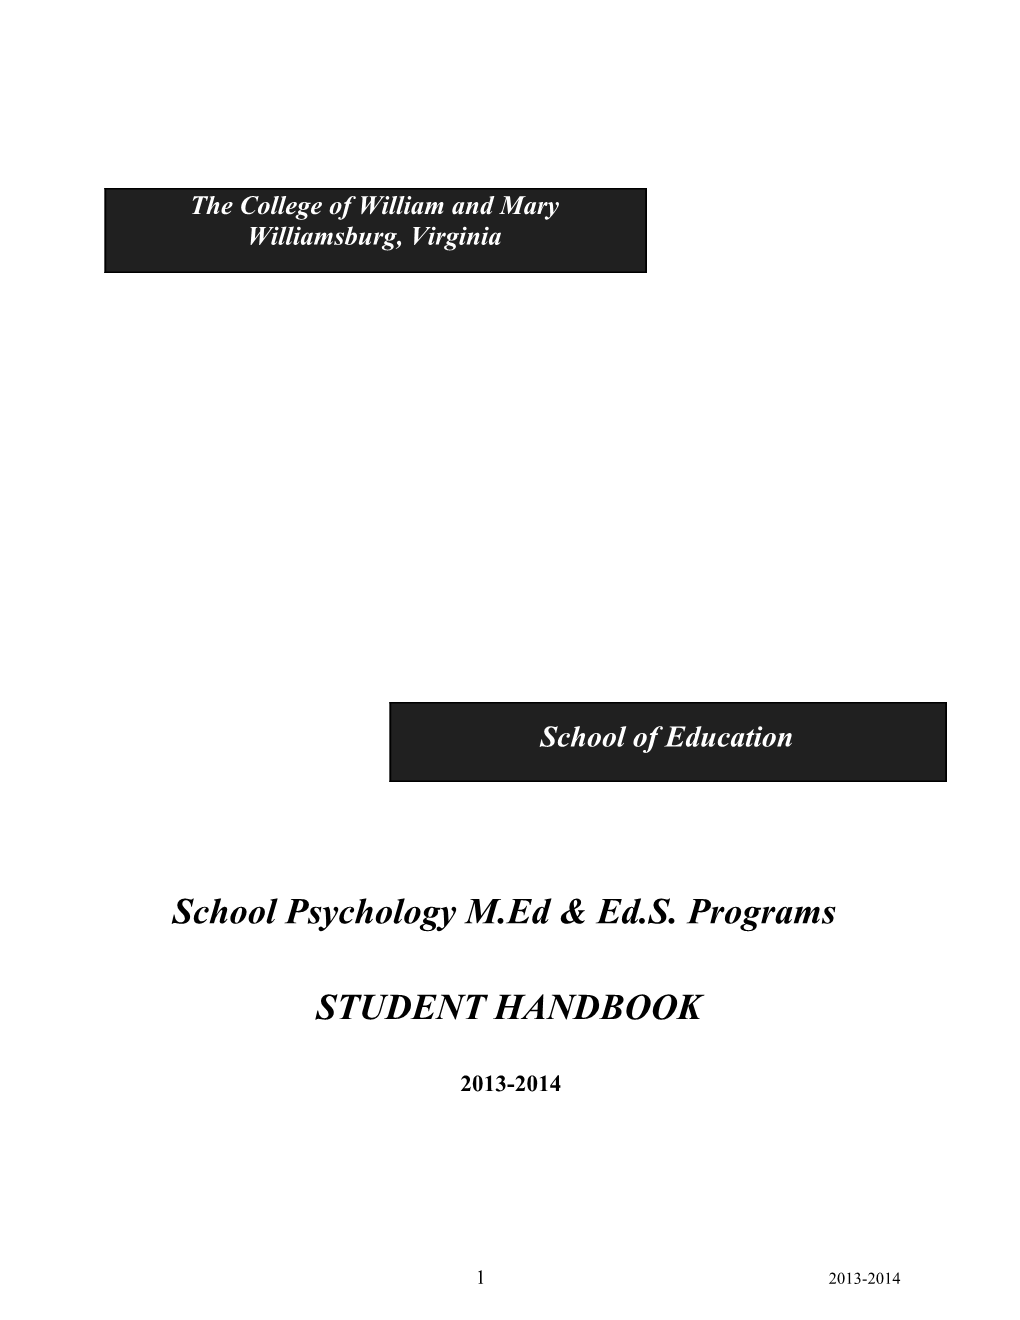 School Psychology M.Ed & Ed.S. Programs